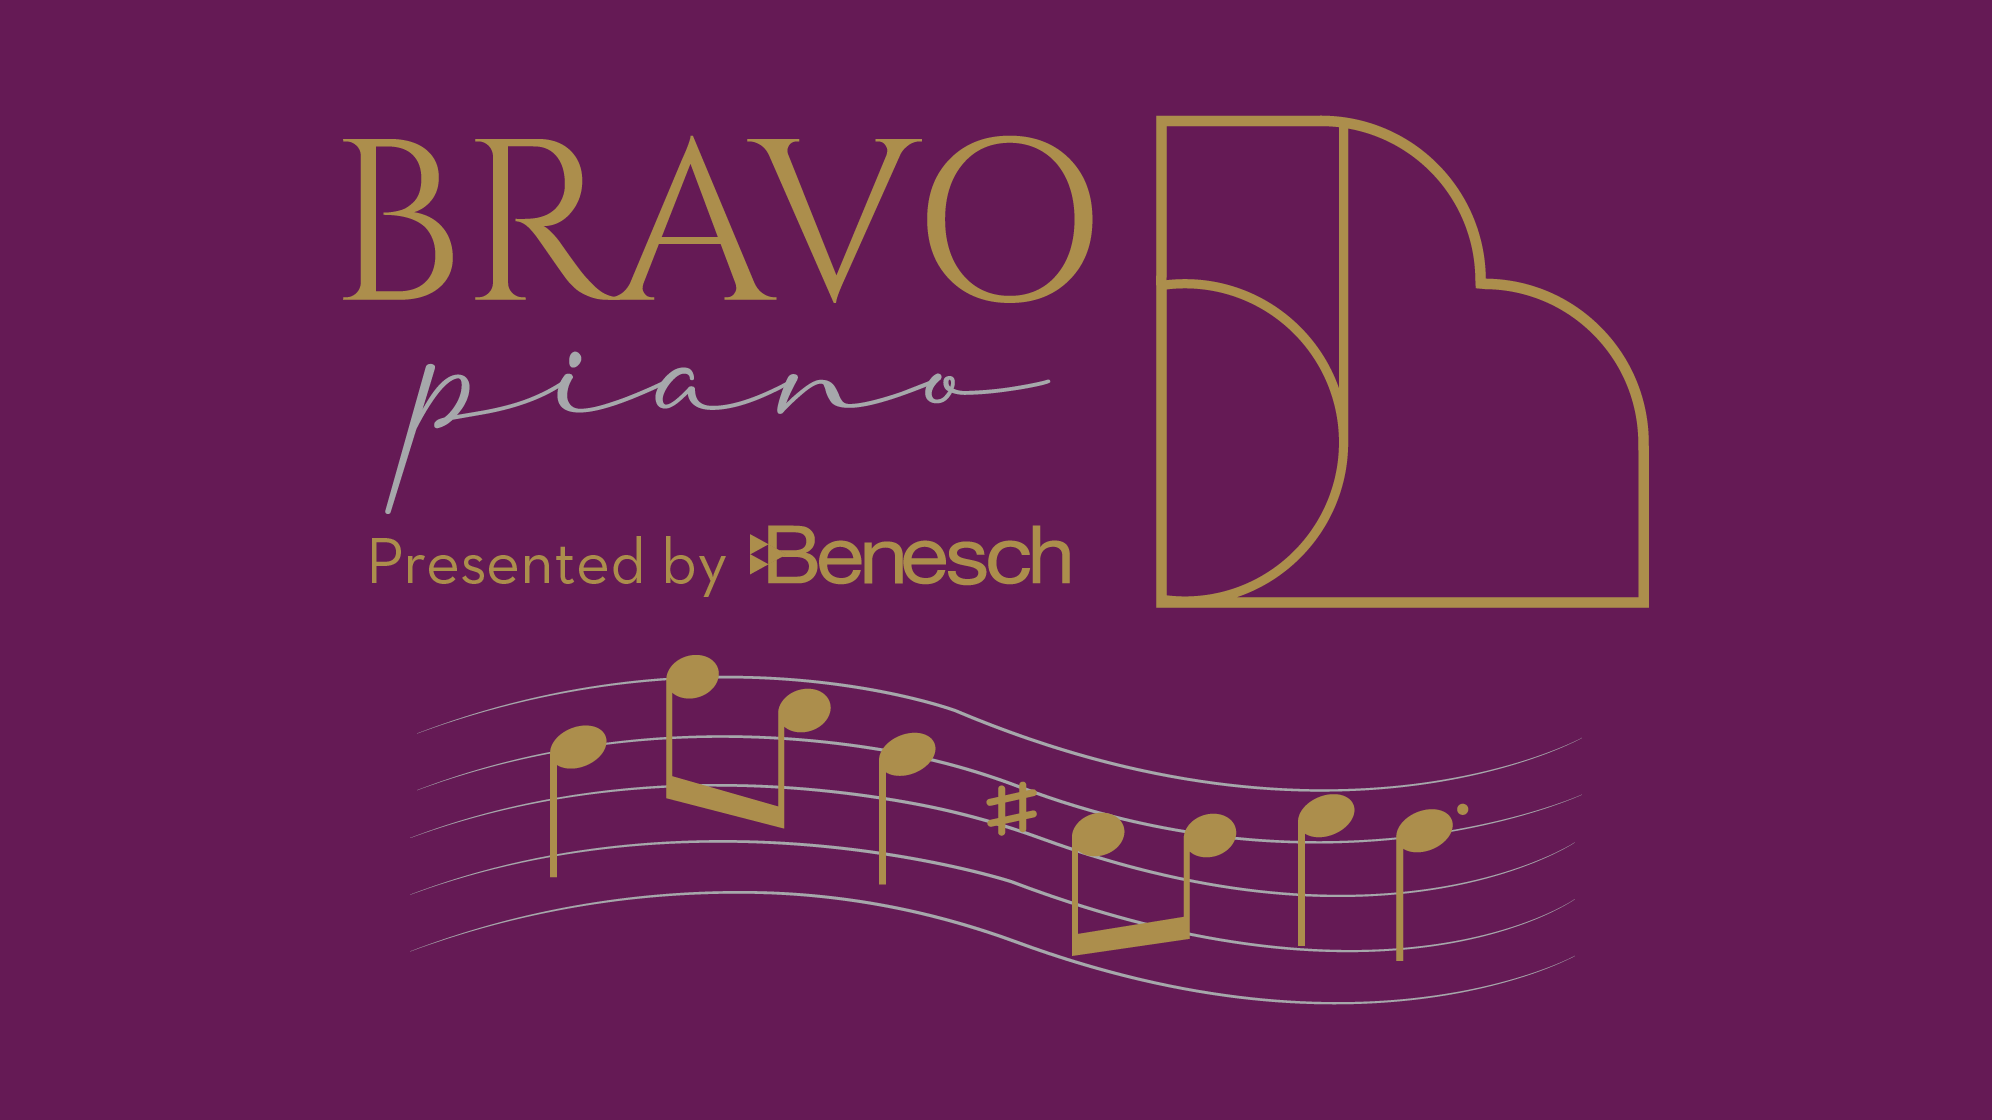 Bravo Piano presented by Benesch